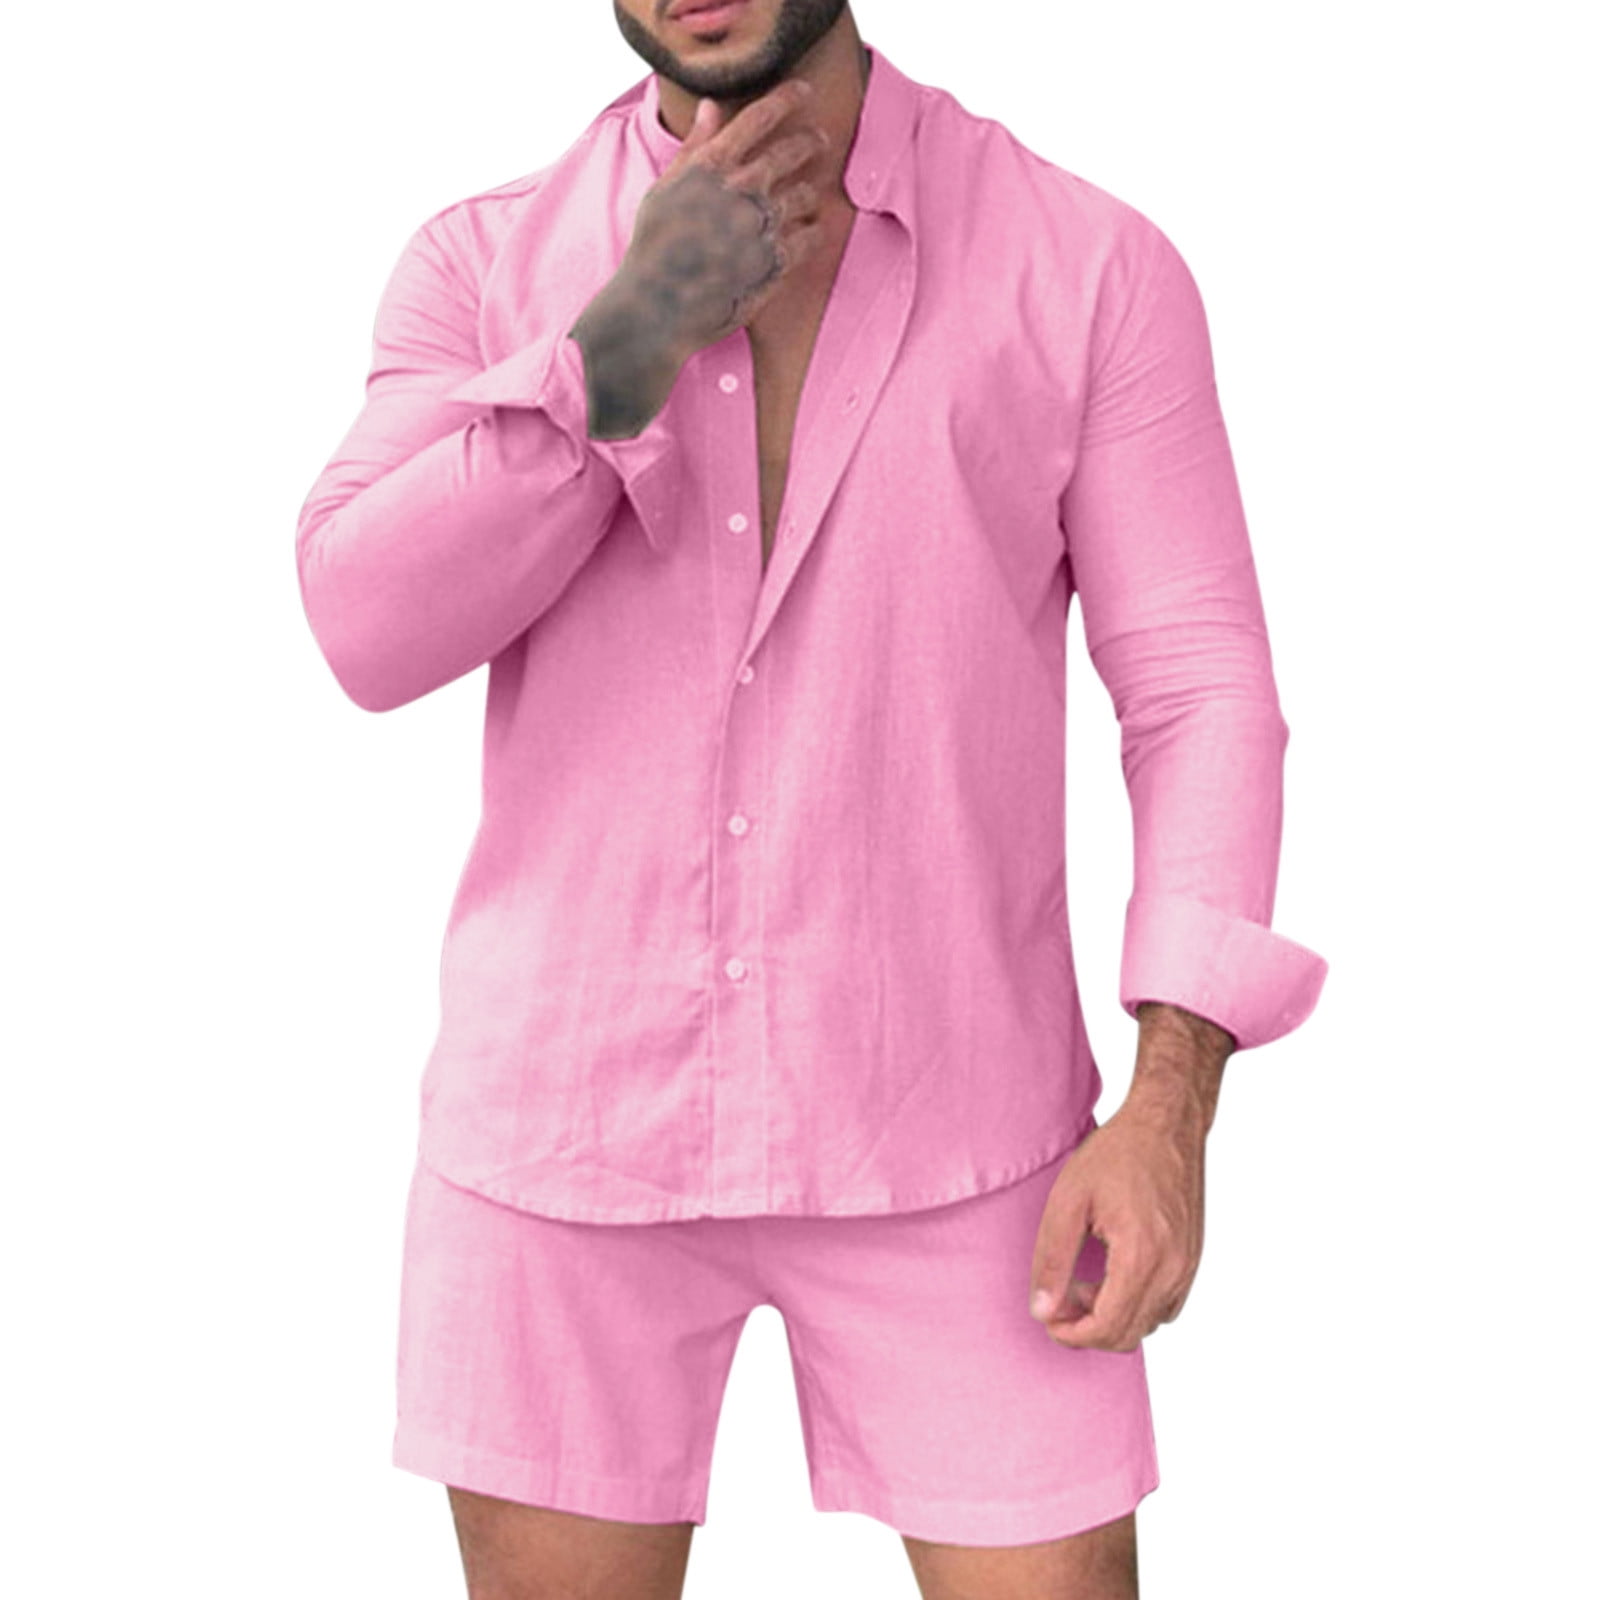 Ongelofelijk roddel Tragisch Outfmvch long sleeve shirts for men Round Neck Long Sleeve Solid Casual  Fashion Sports Shirt Shorts Suit womens tops Pink - Walmart.com